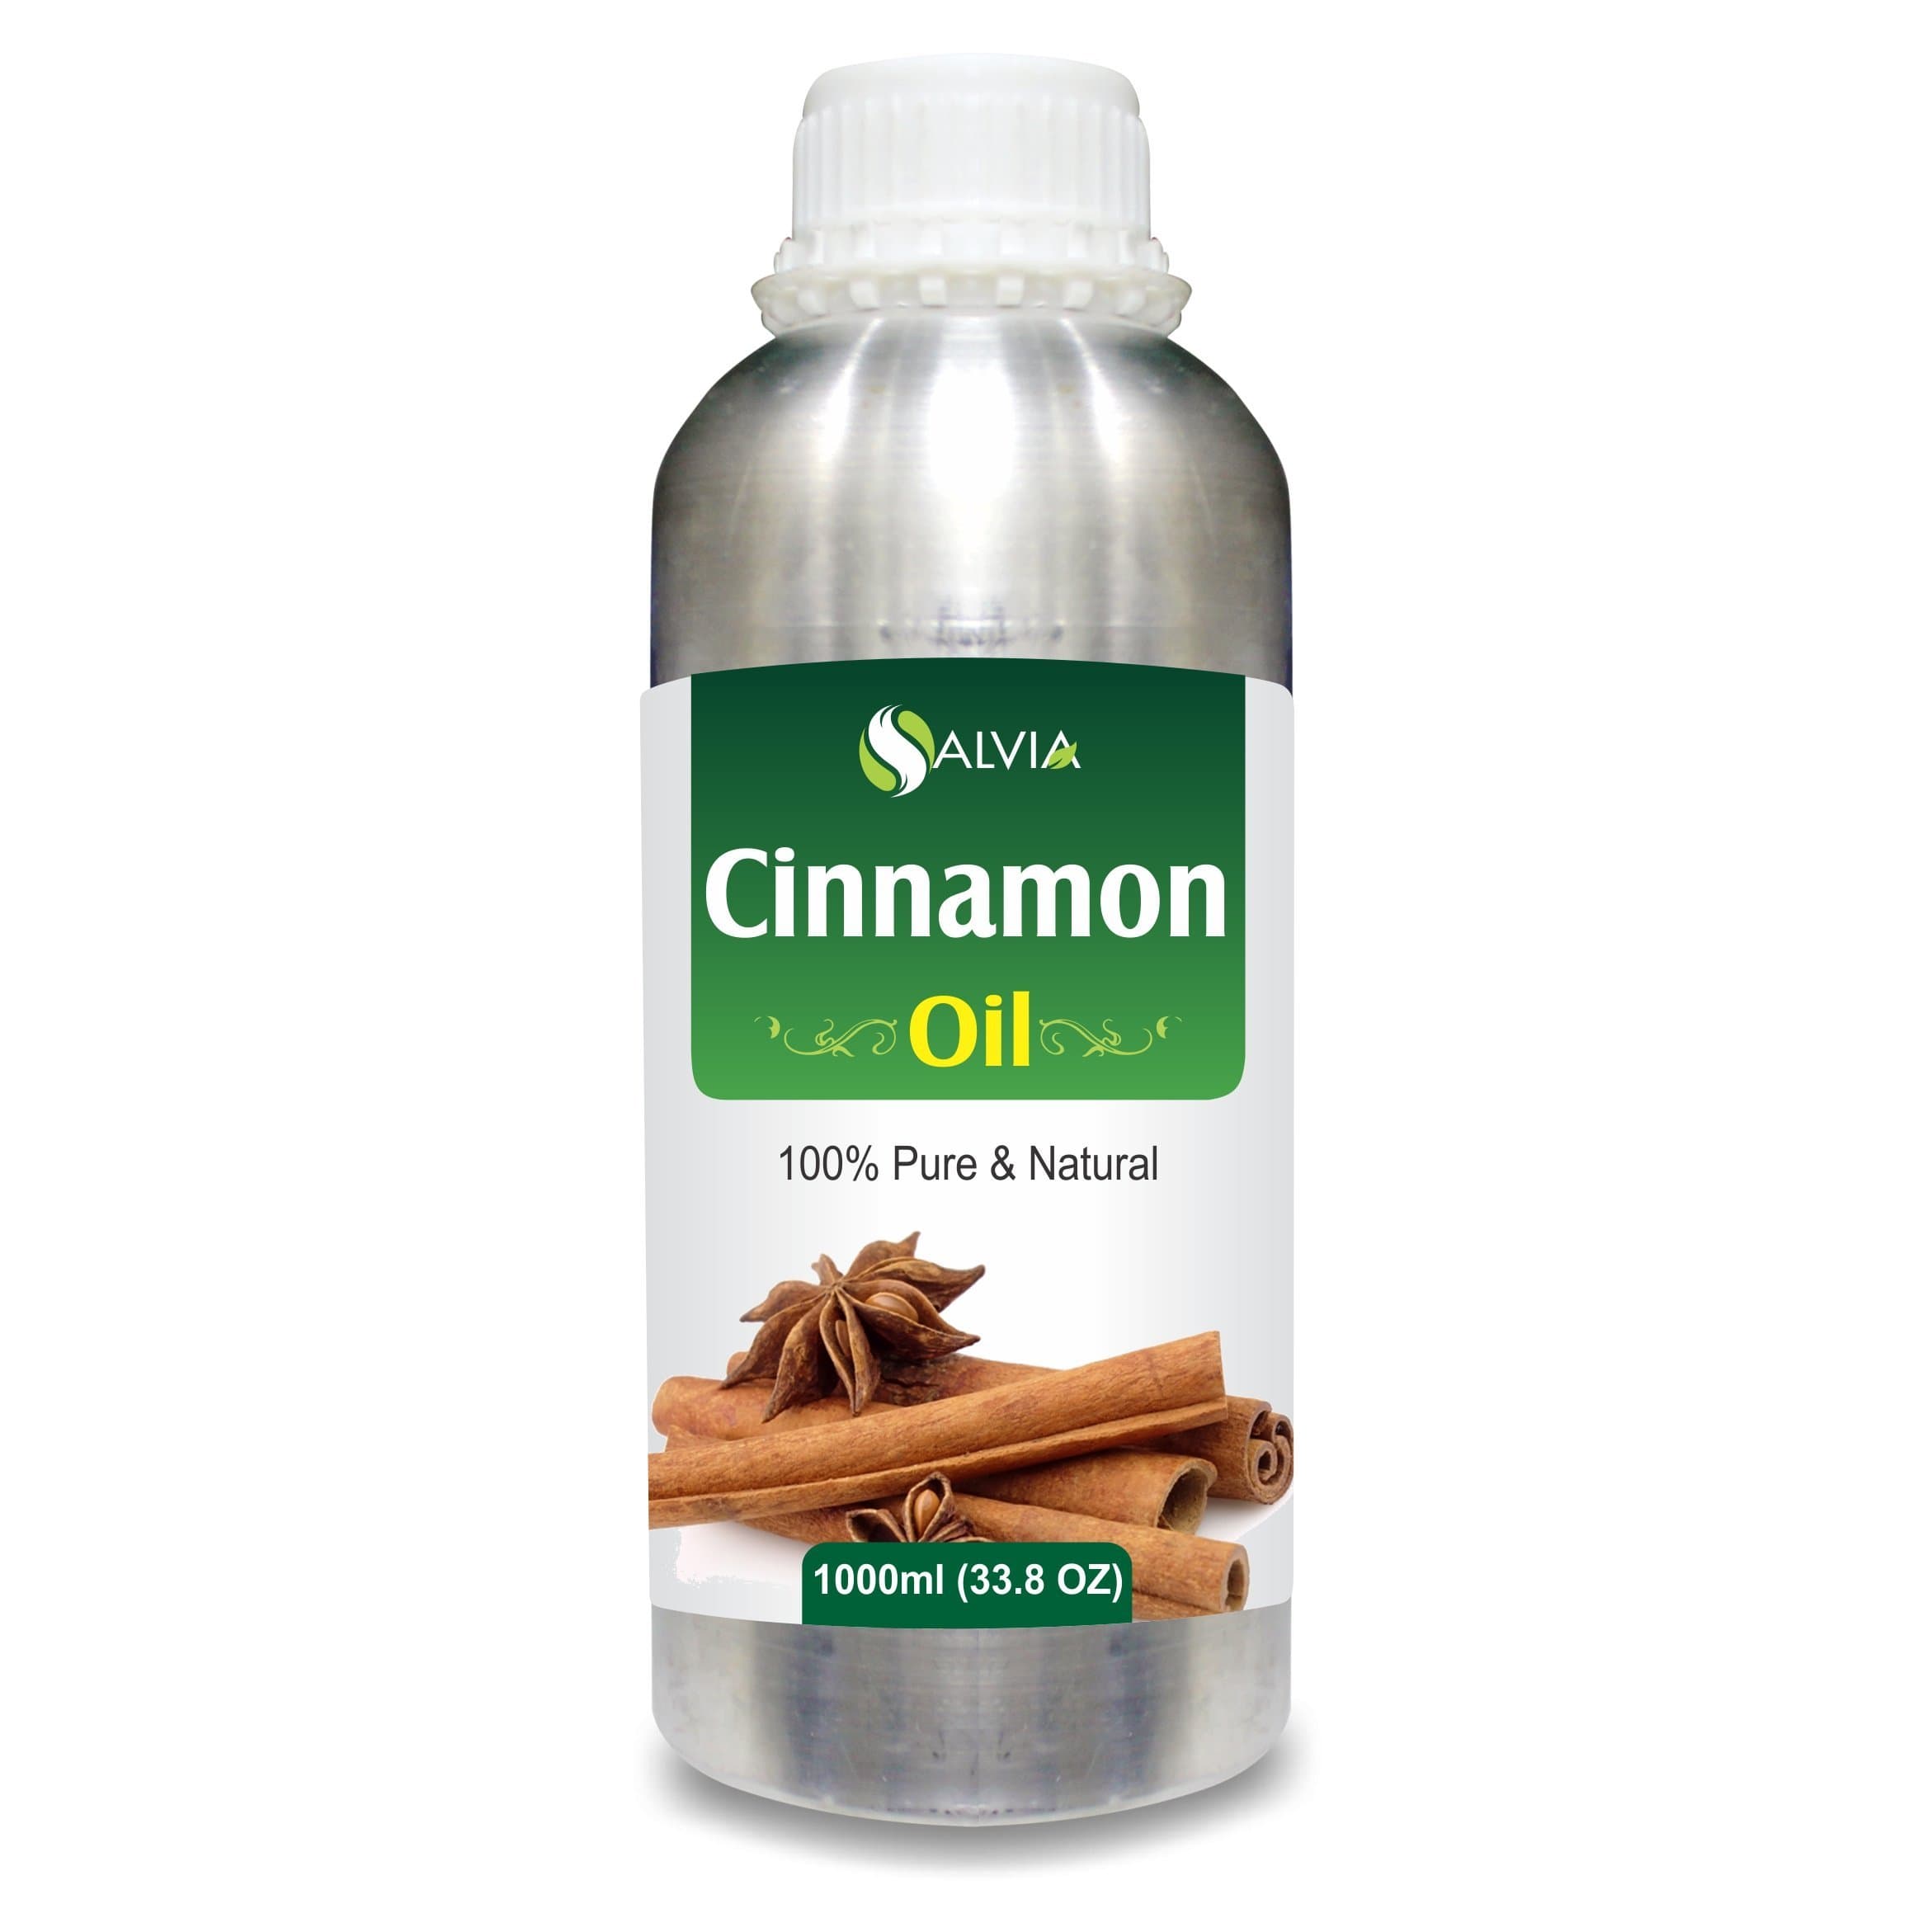 cinnamon oil benefits for skin